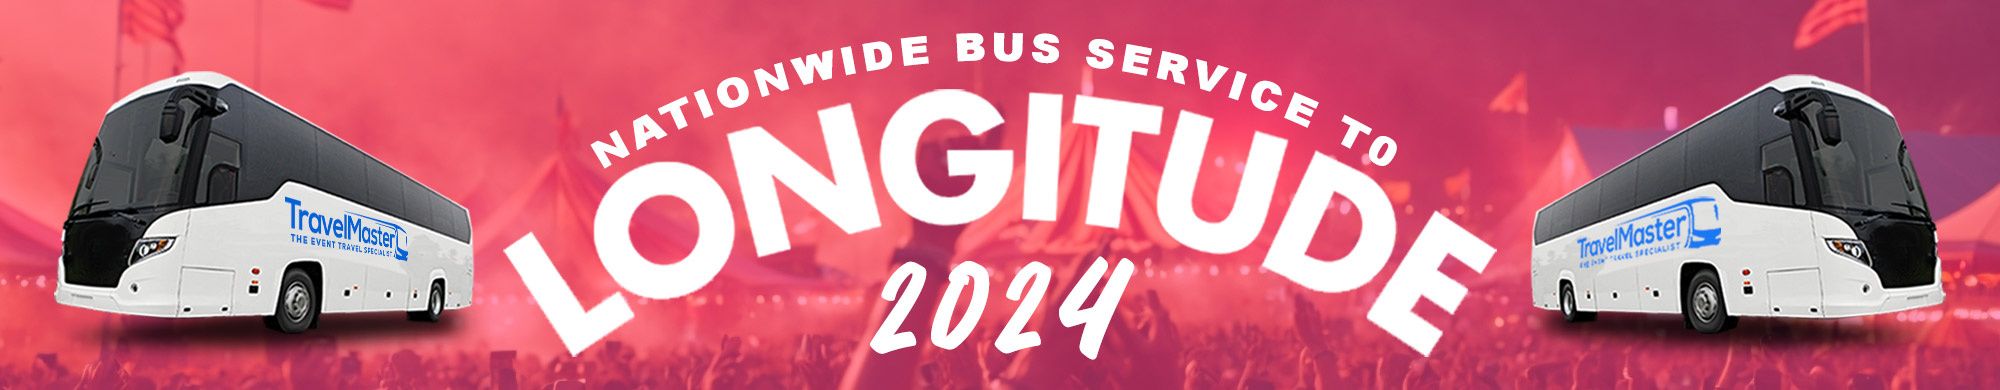 Bus to Longitude Festival 2024